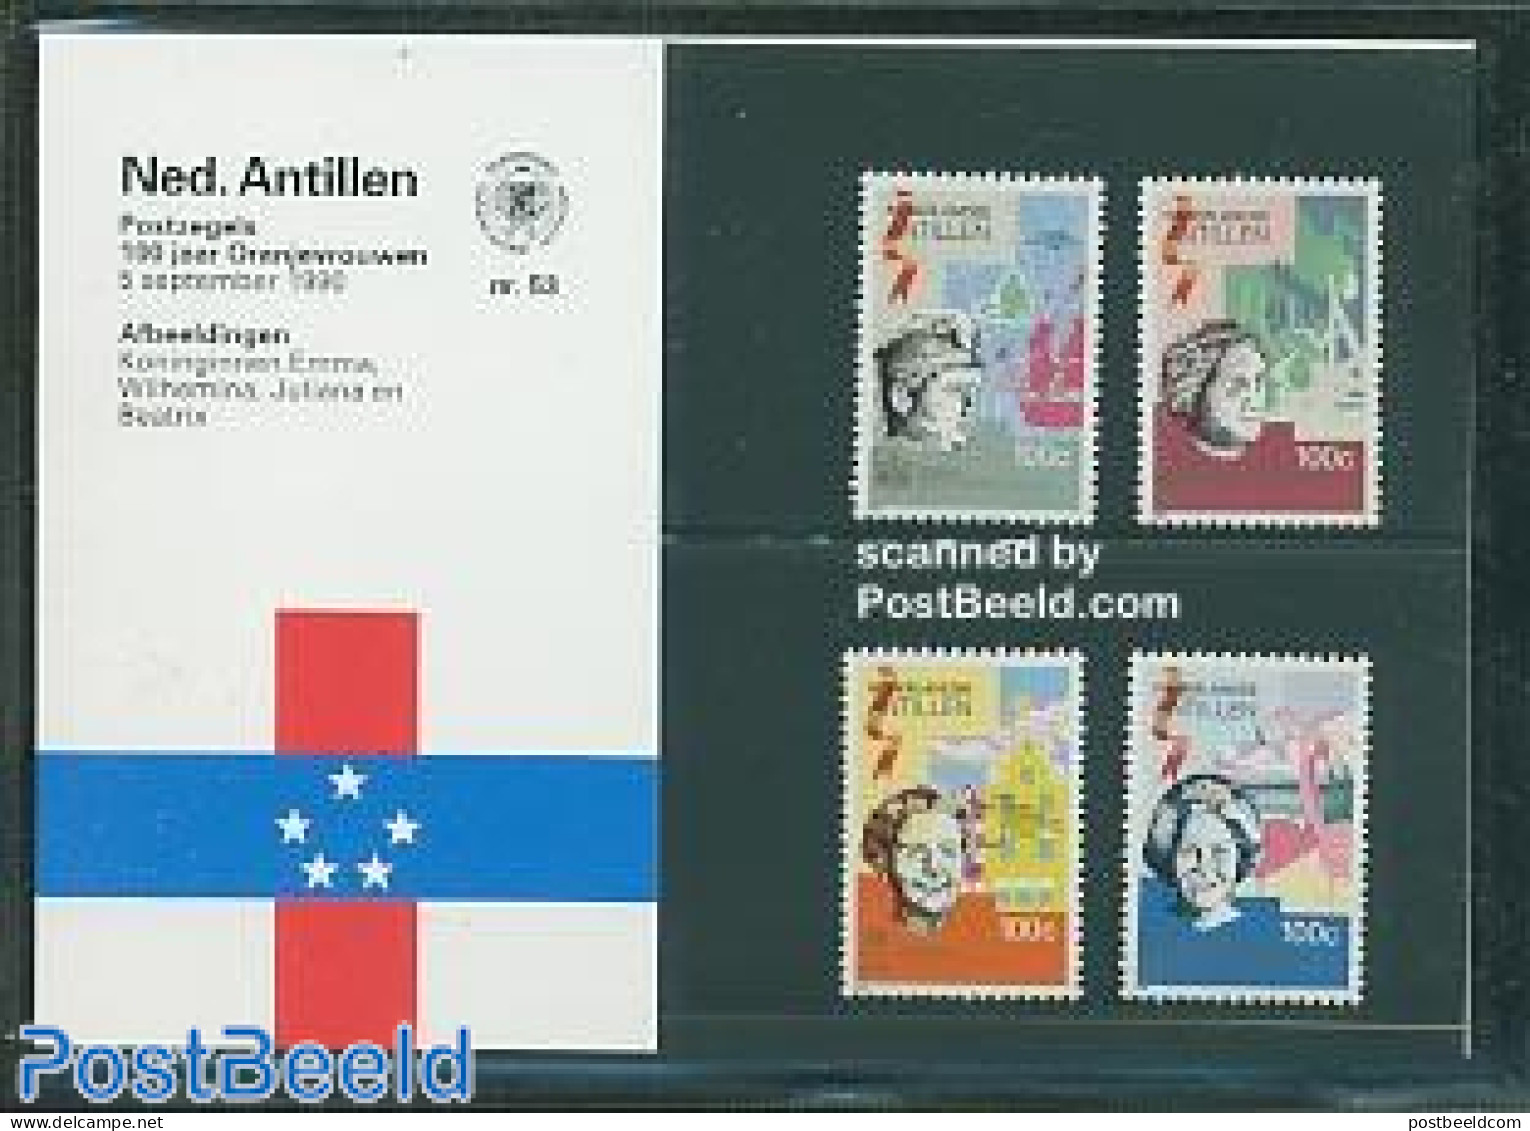 Netherlands Antilles 1990 Four Queens Presentation Pack 53, Mint NH, History - Various - Kings & Queens (Royalty) - Maps - Königshäuser, Adel